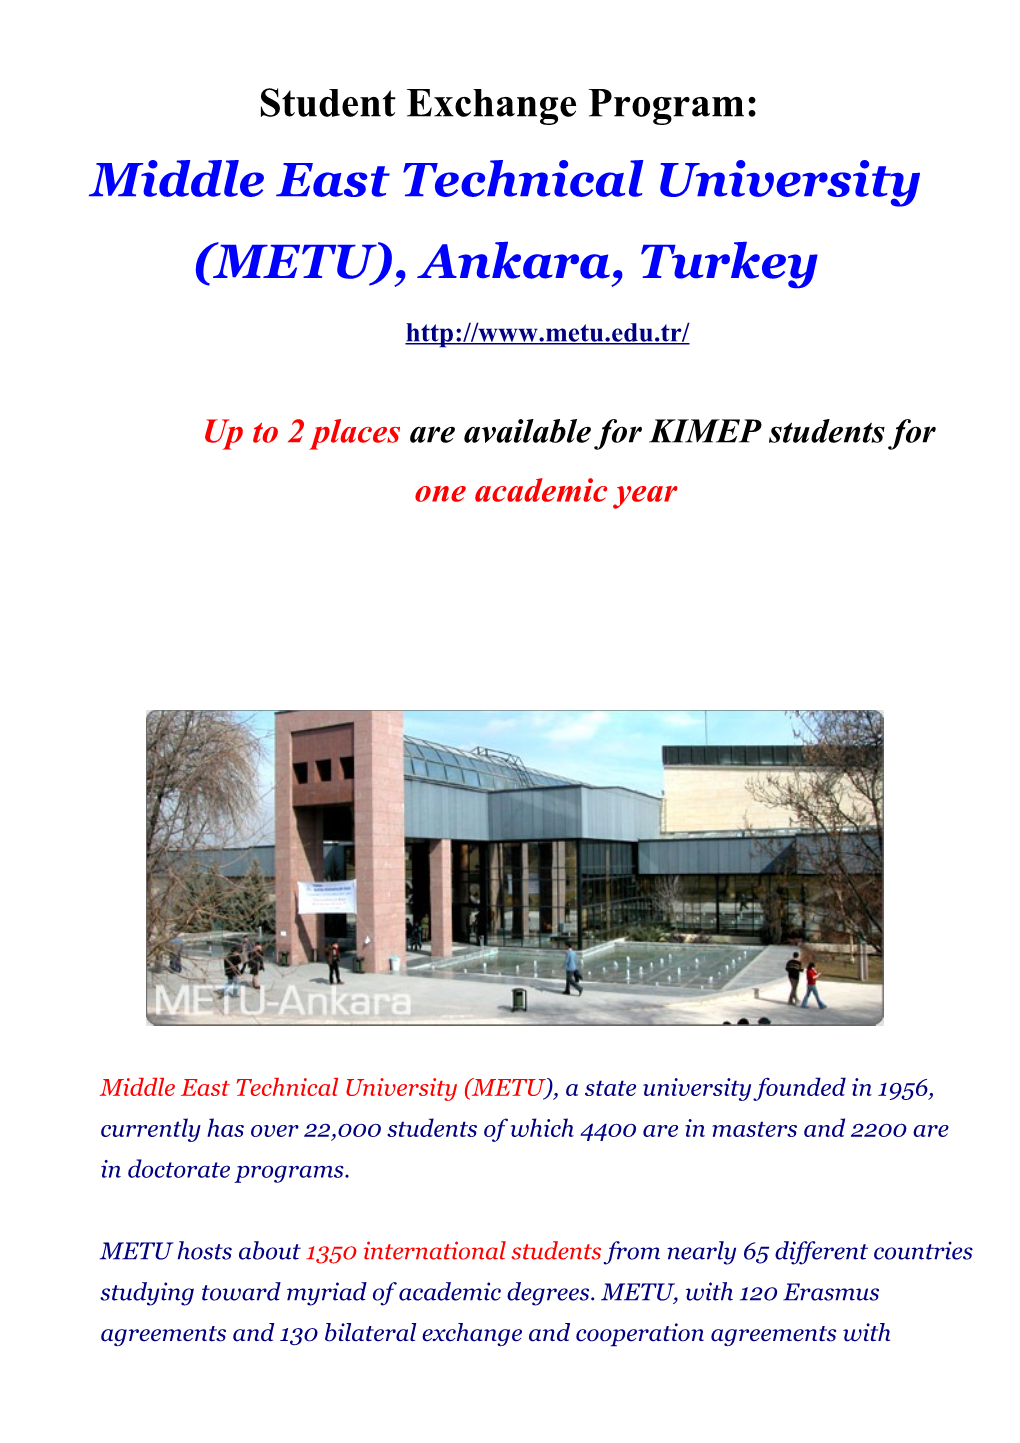 Middle East Technical University, Ankara, Turkey